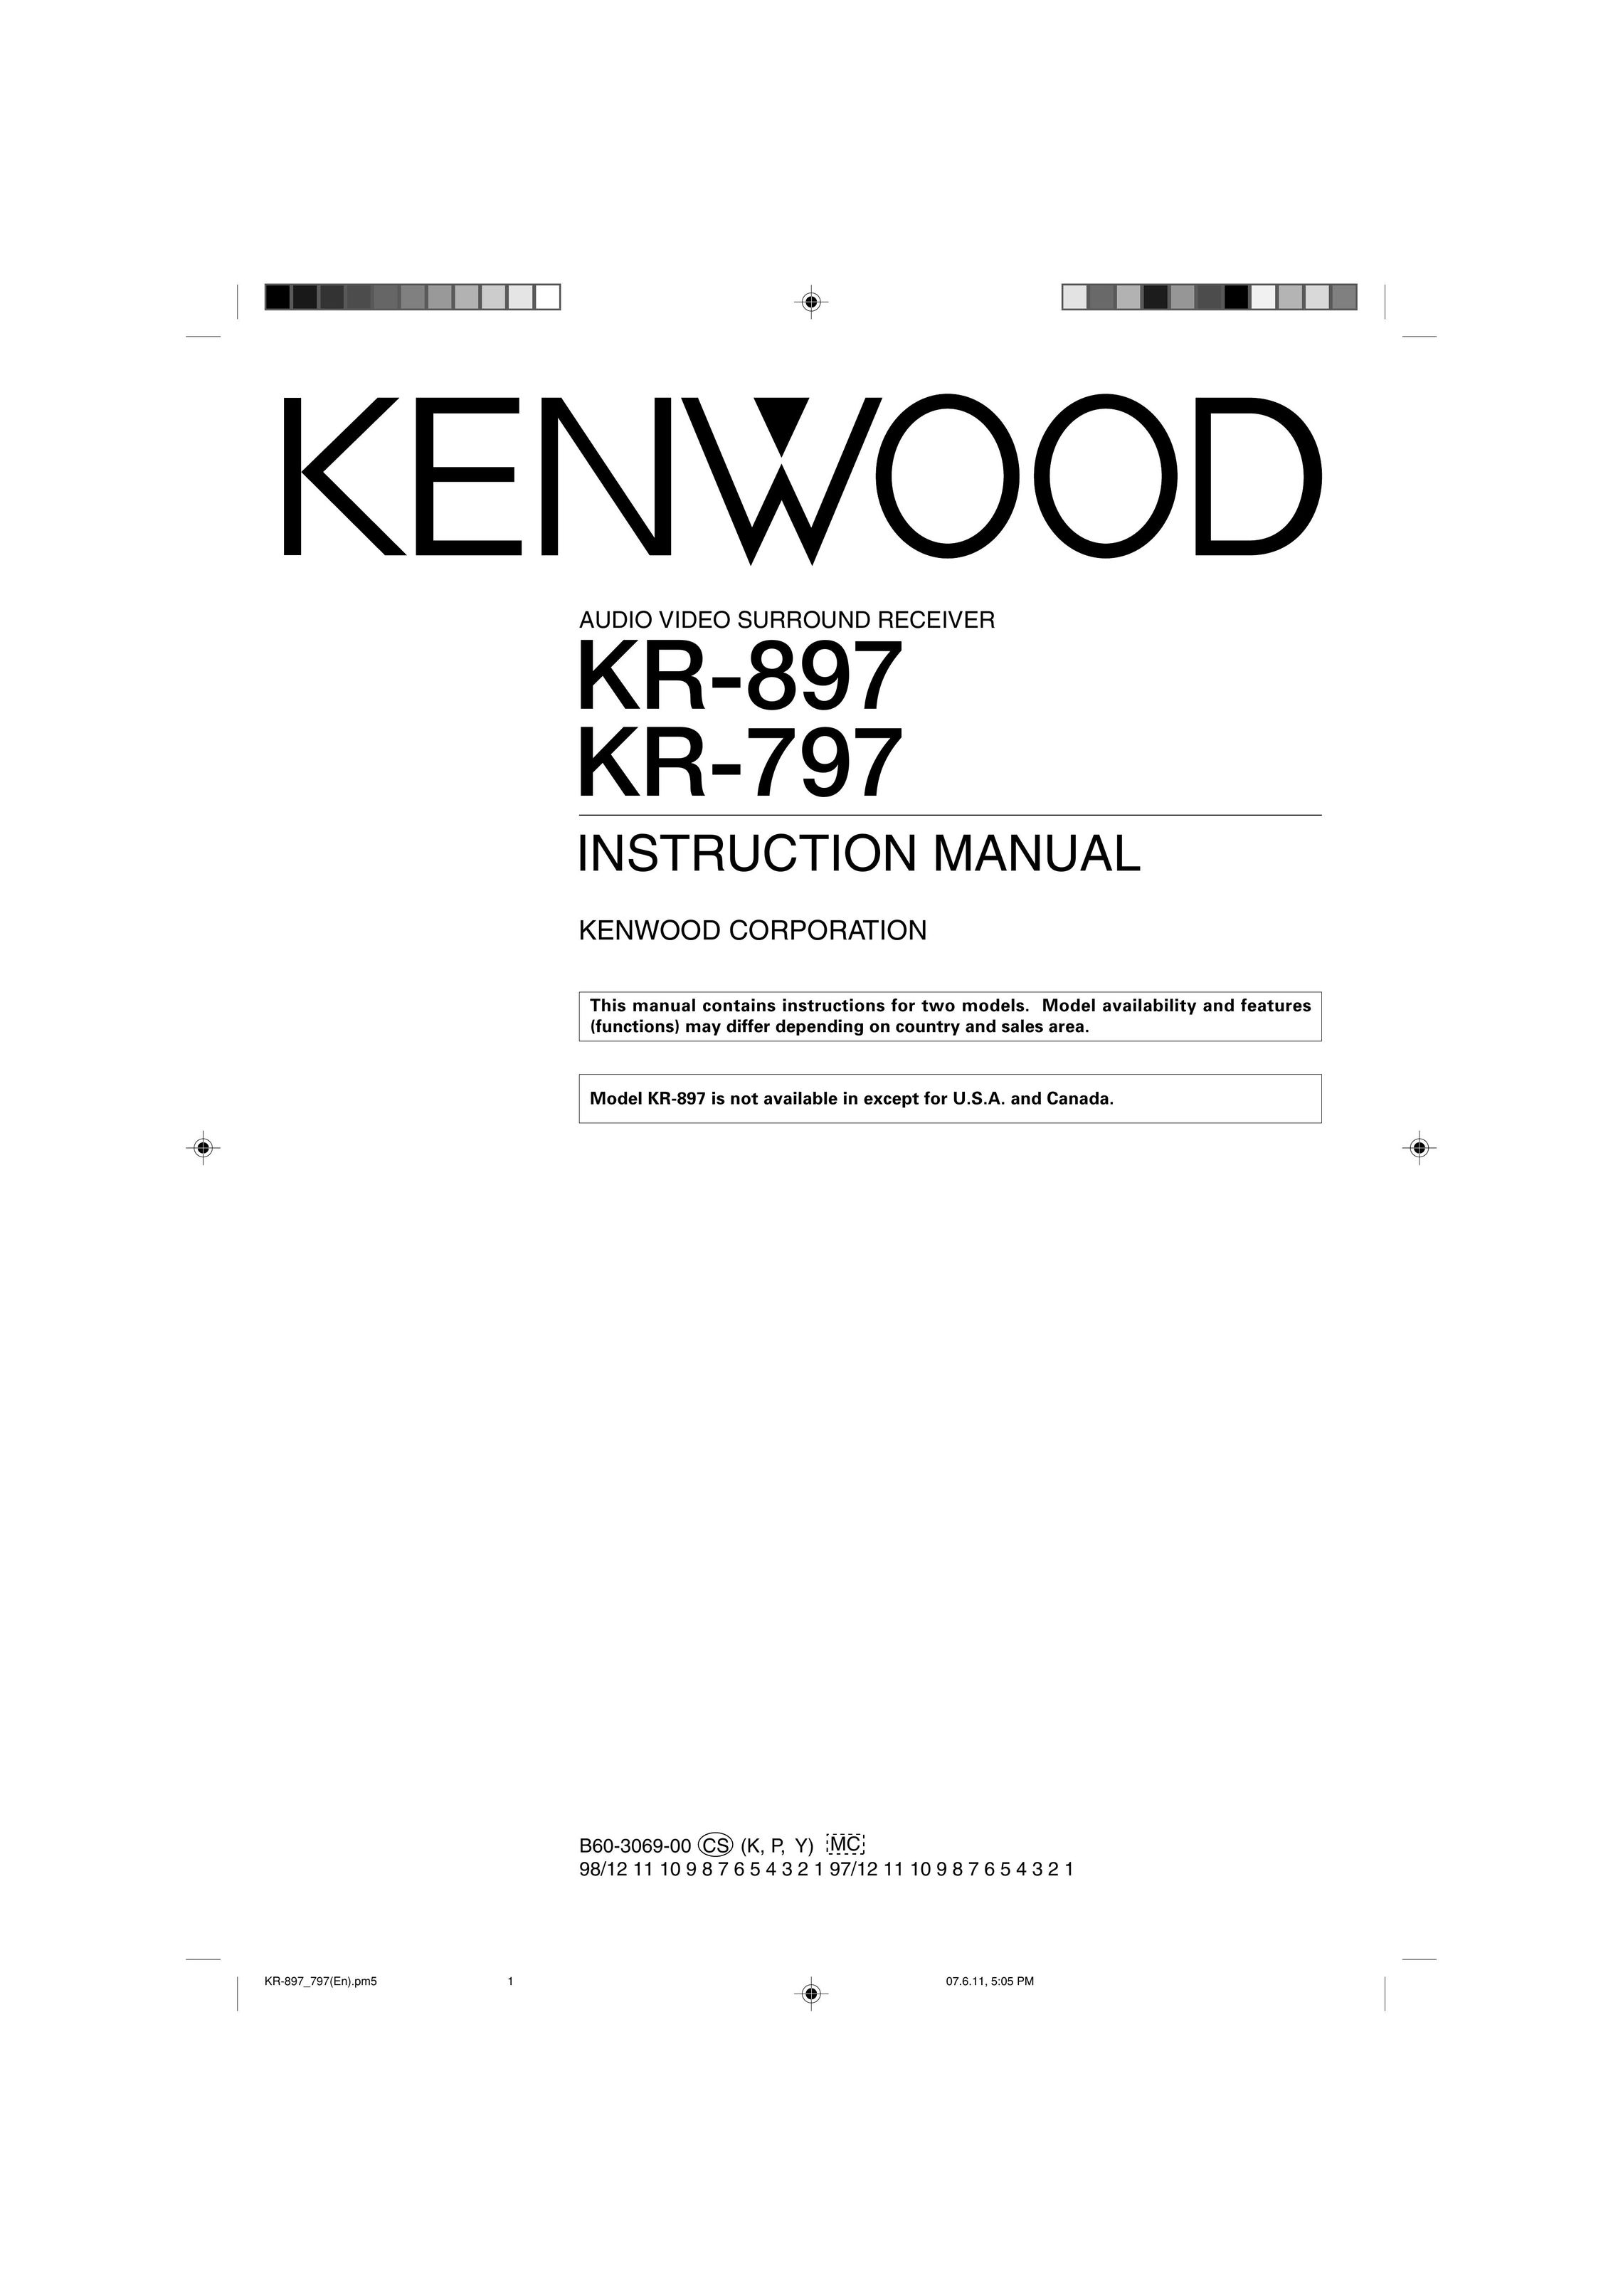 Kenwood KR-897 Stereo Receiver User Manual